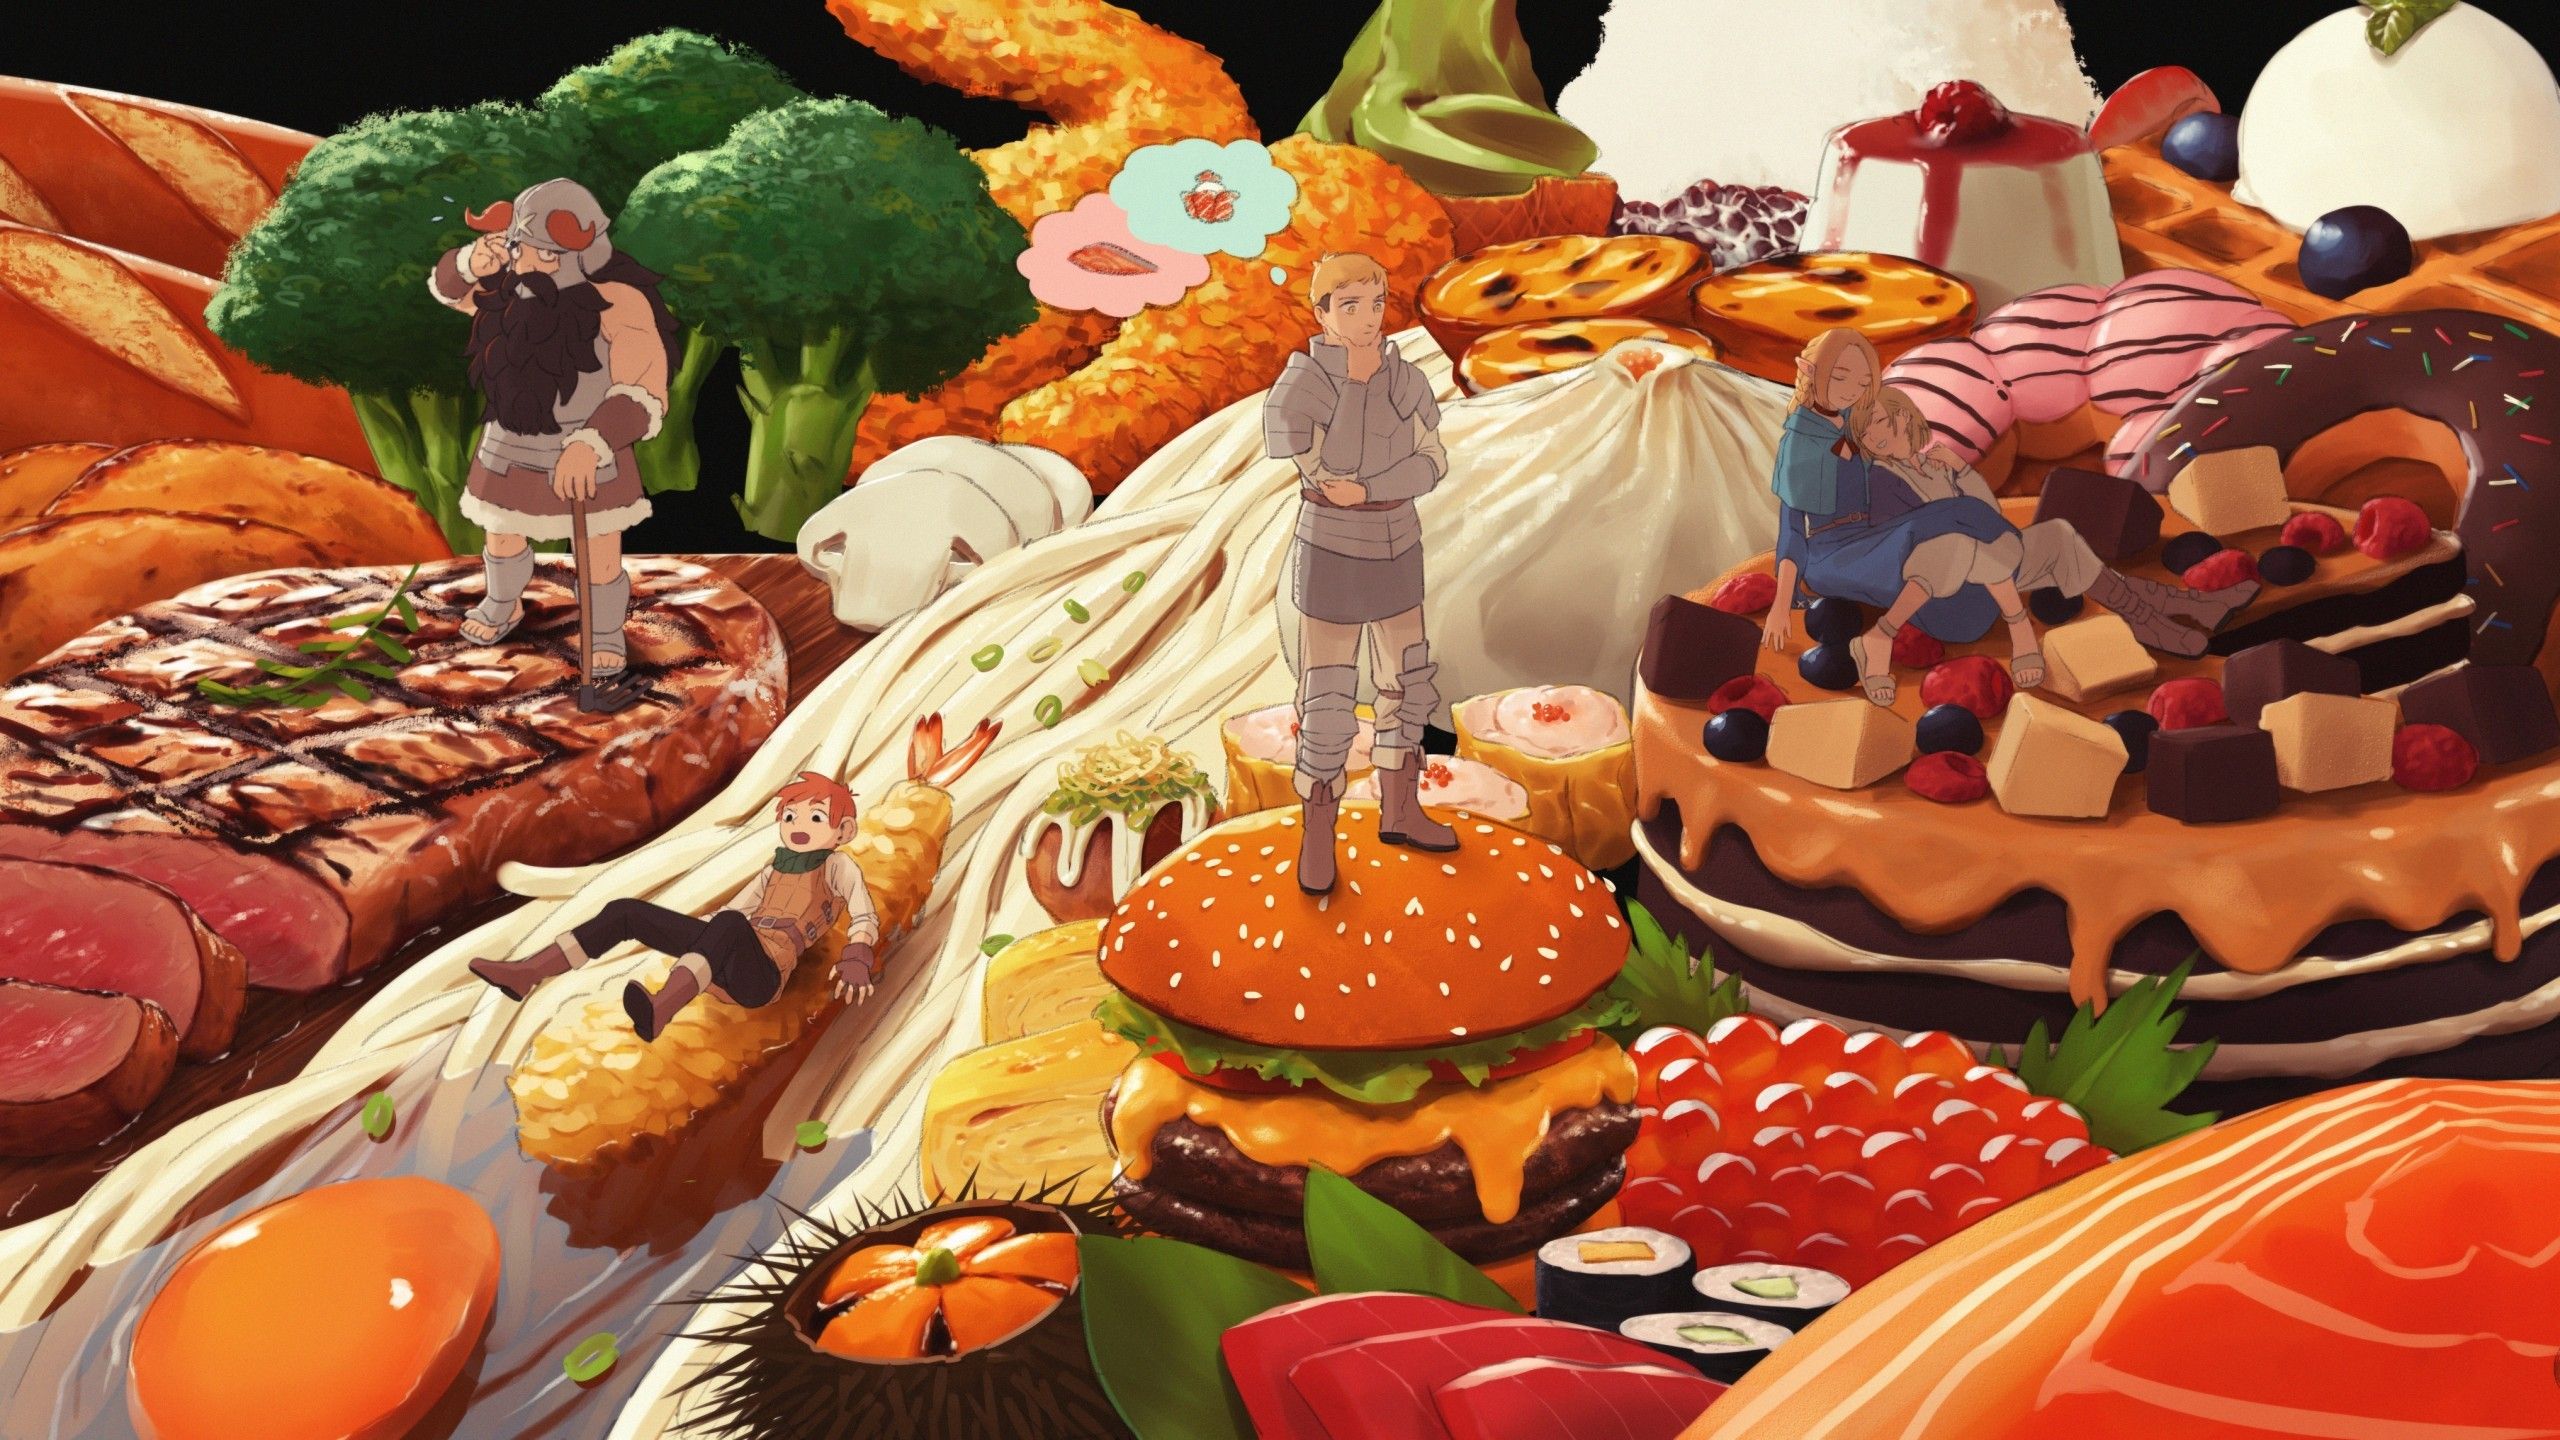 Download 2560x1440 Anime Food, Dungeon Meshi, Marcille, Senshi, Laios, Falin, Childchuck Wallpaper for iMac 27 inch